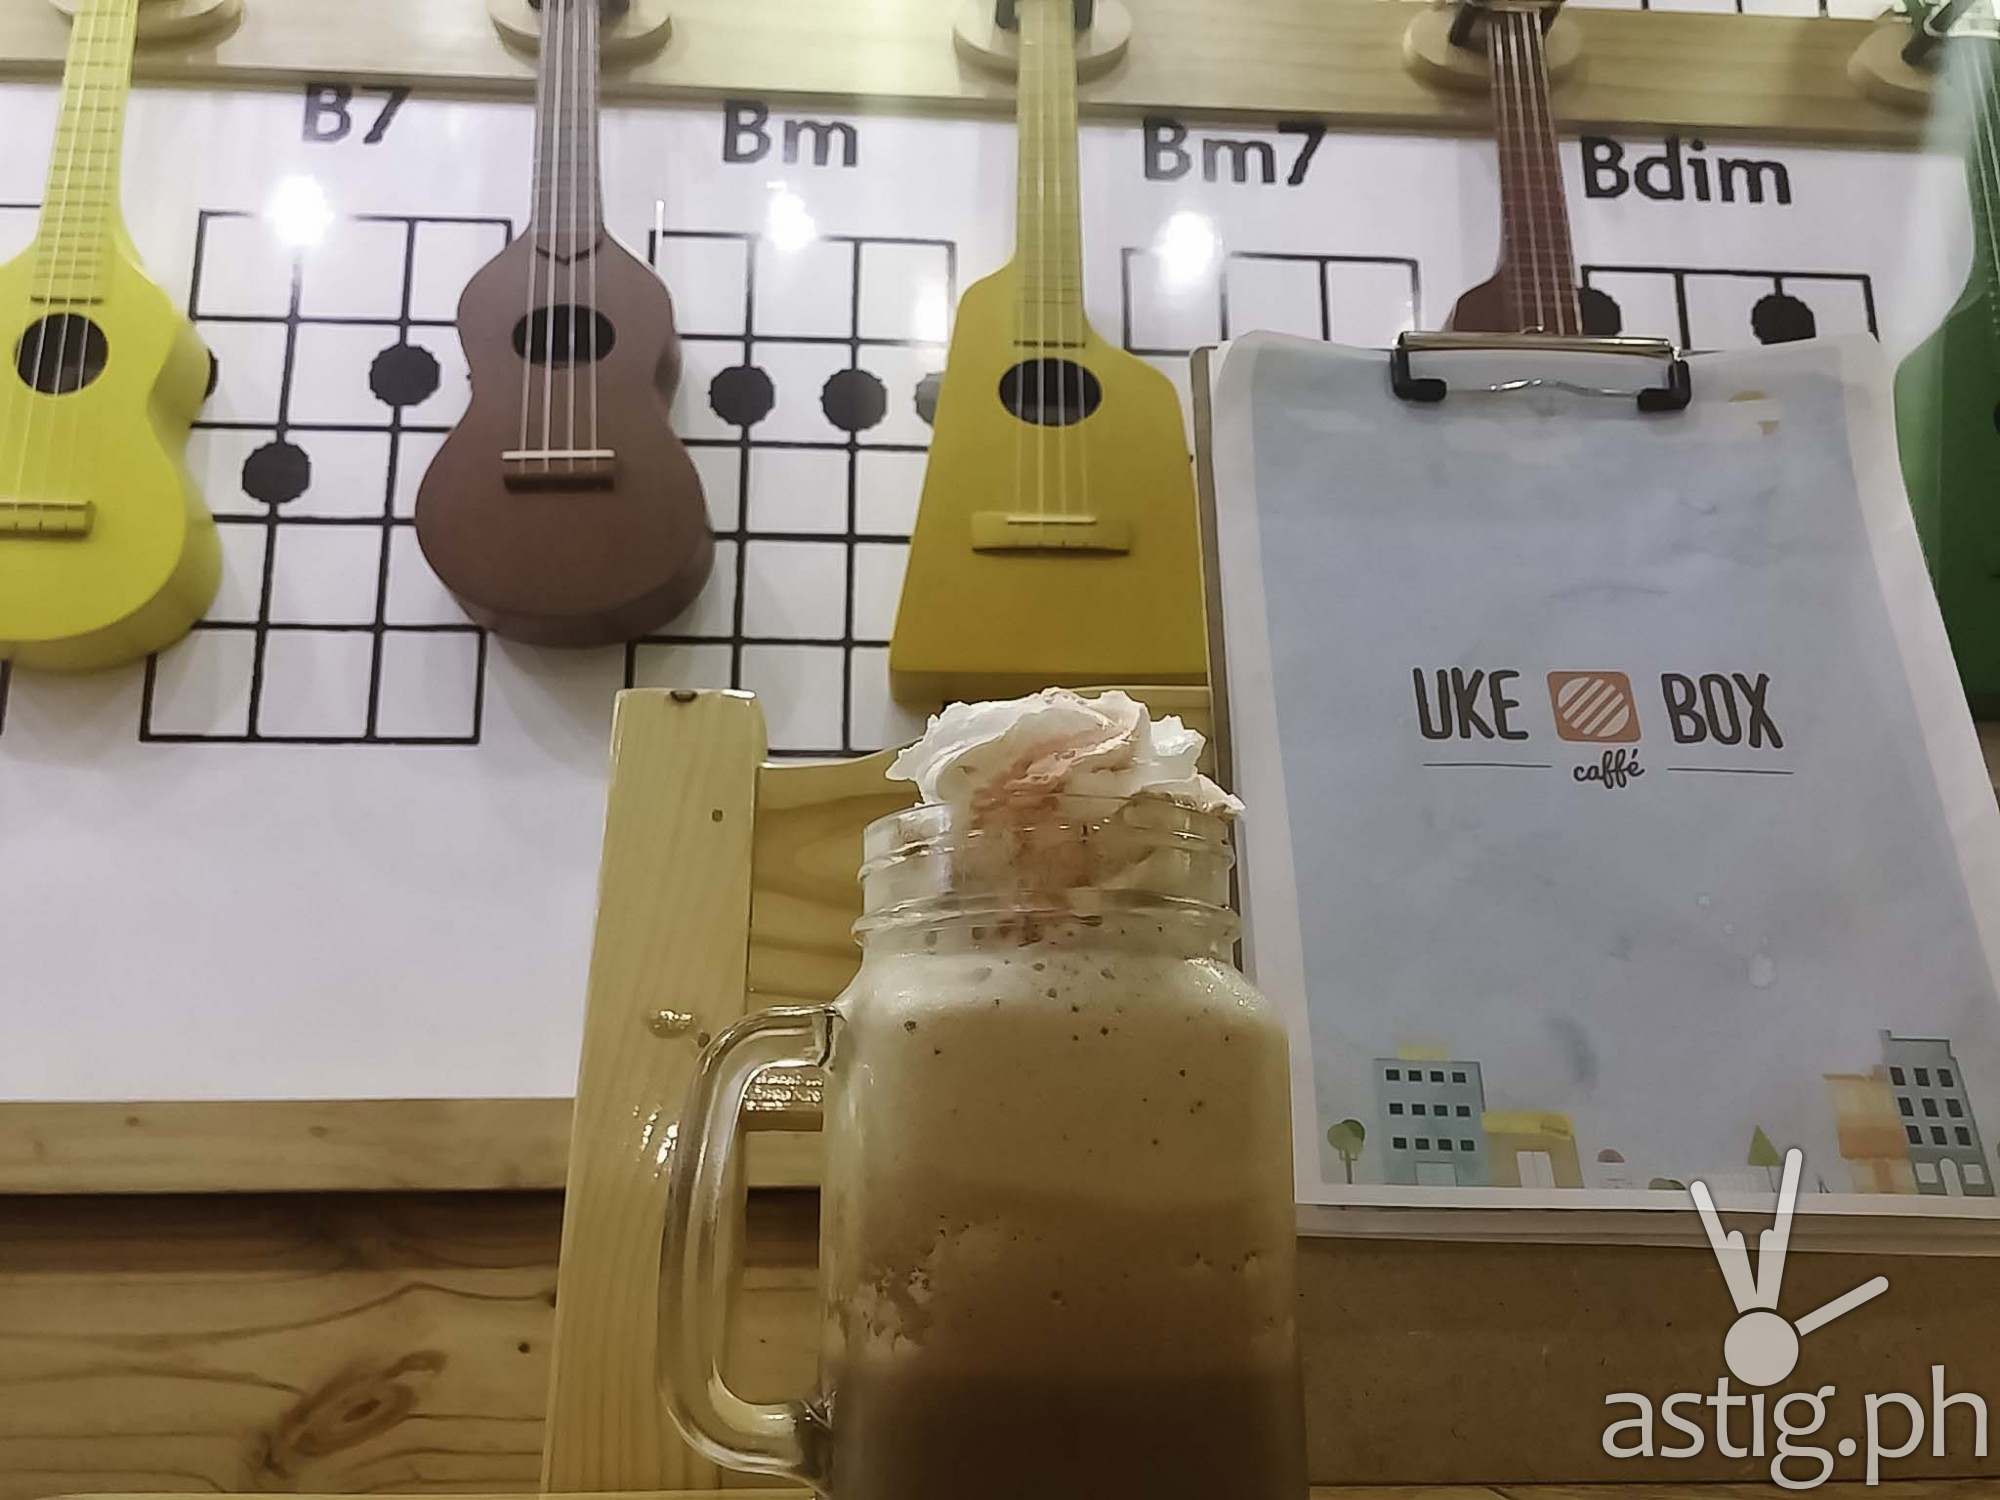 Ice blended coffee at Uke Box Caffe